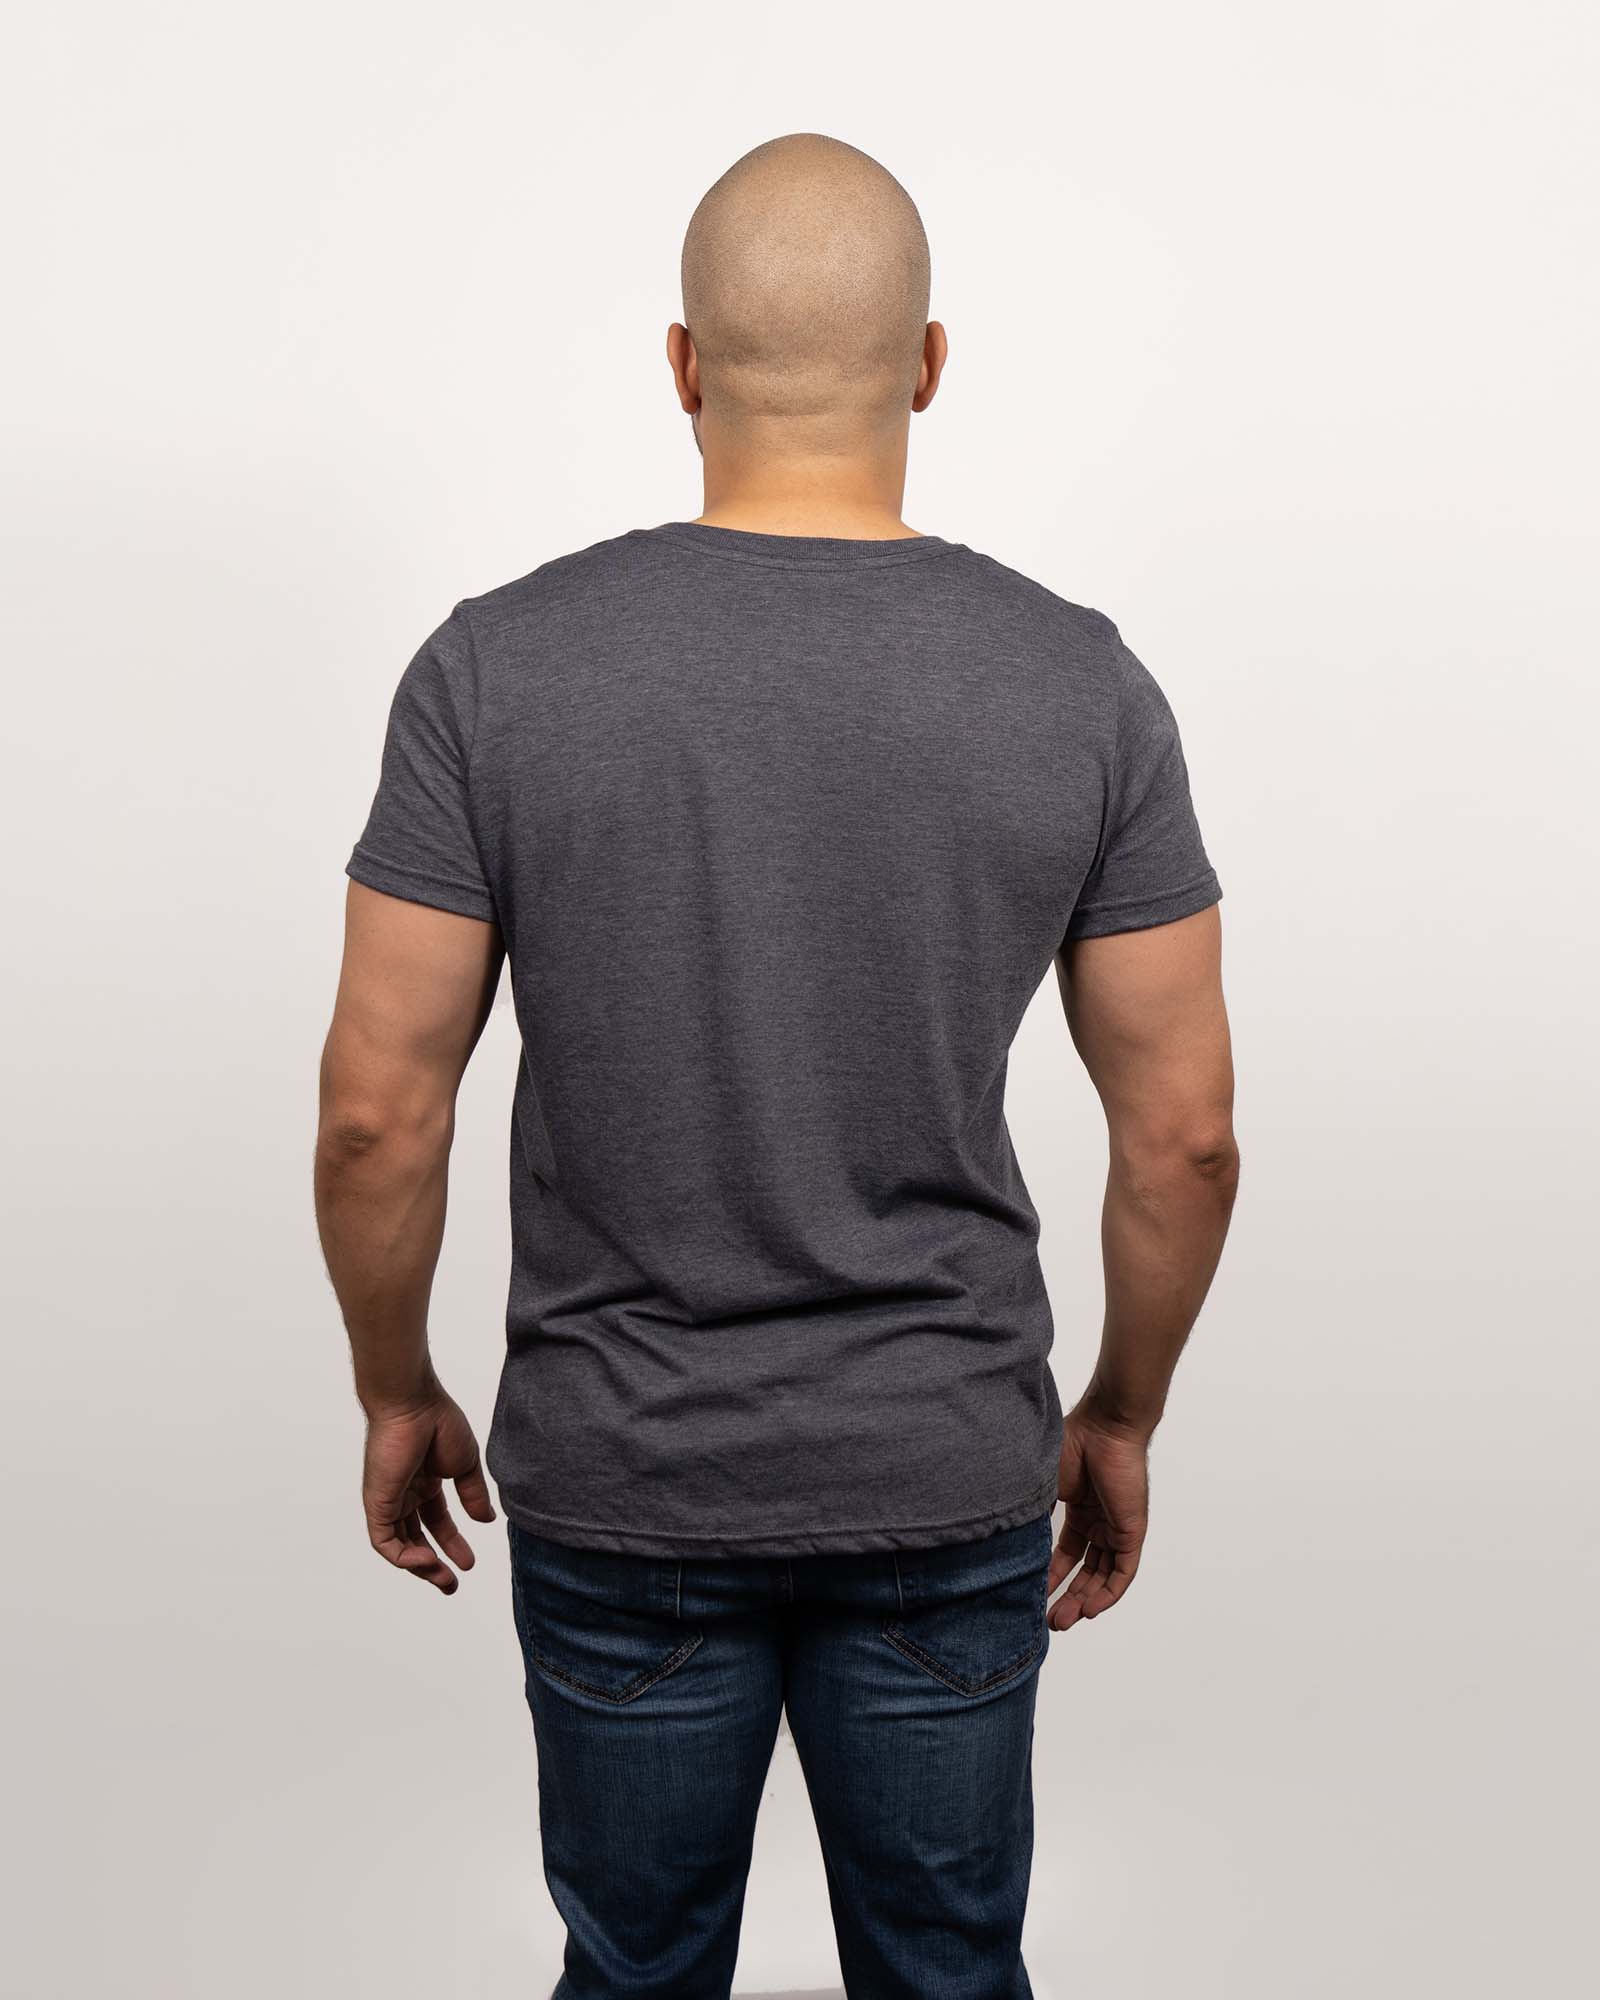 The Tragically Hip X Stanfield's Men's Short Sleeve T-Shirt